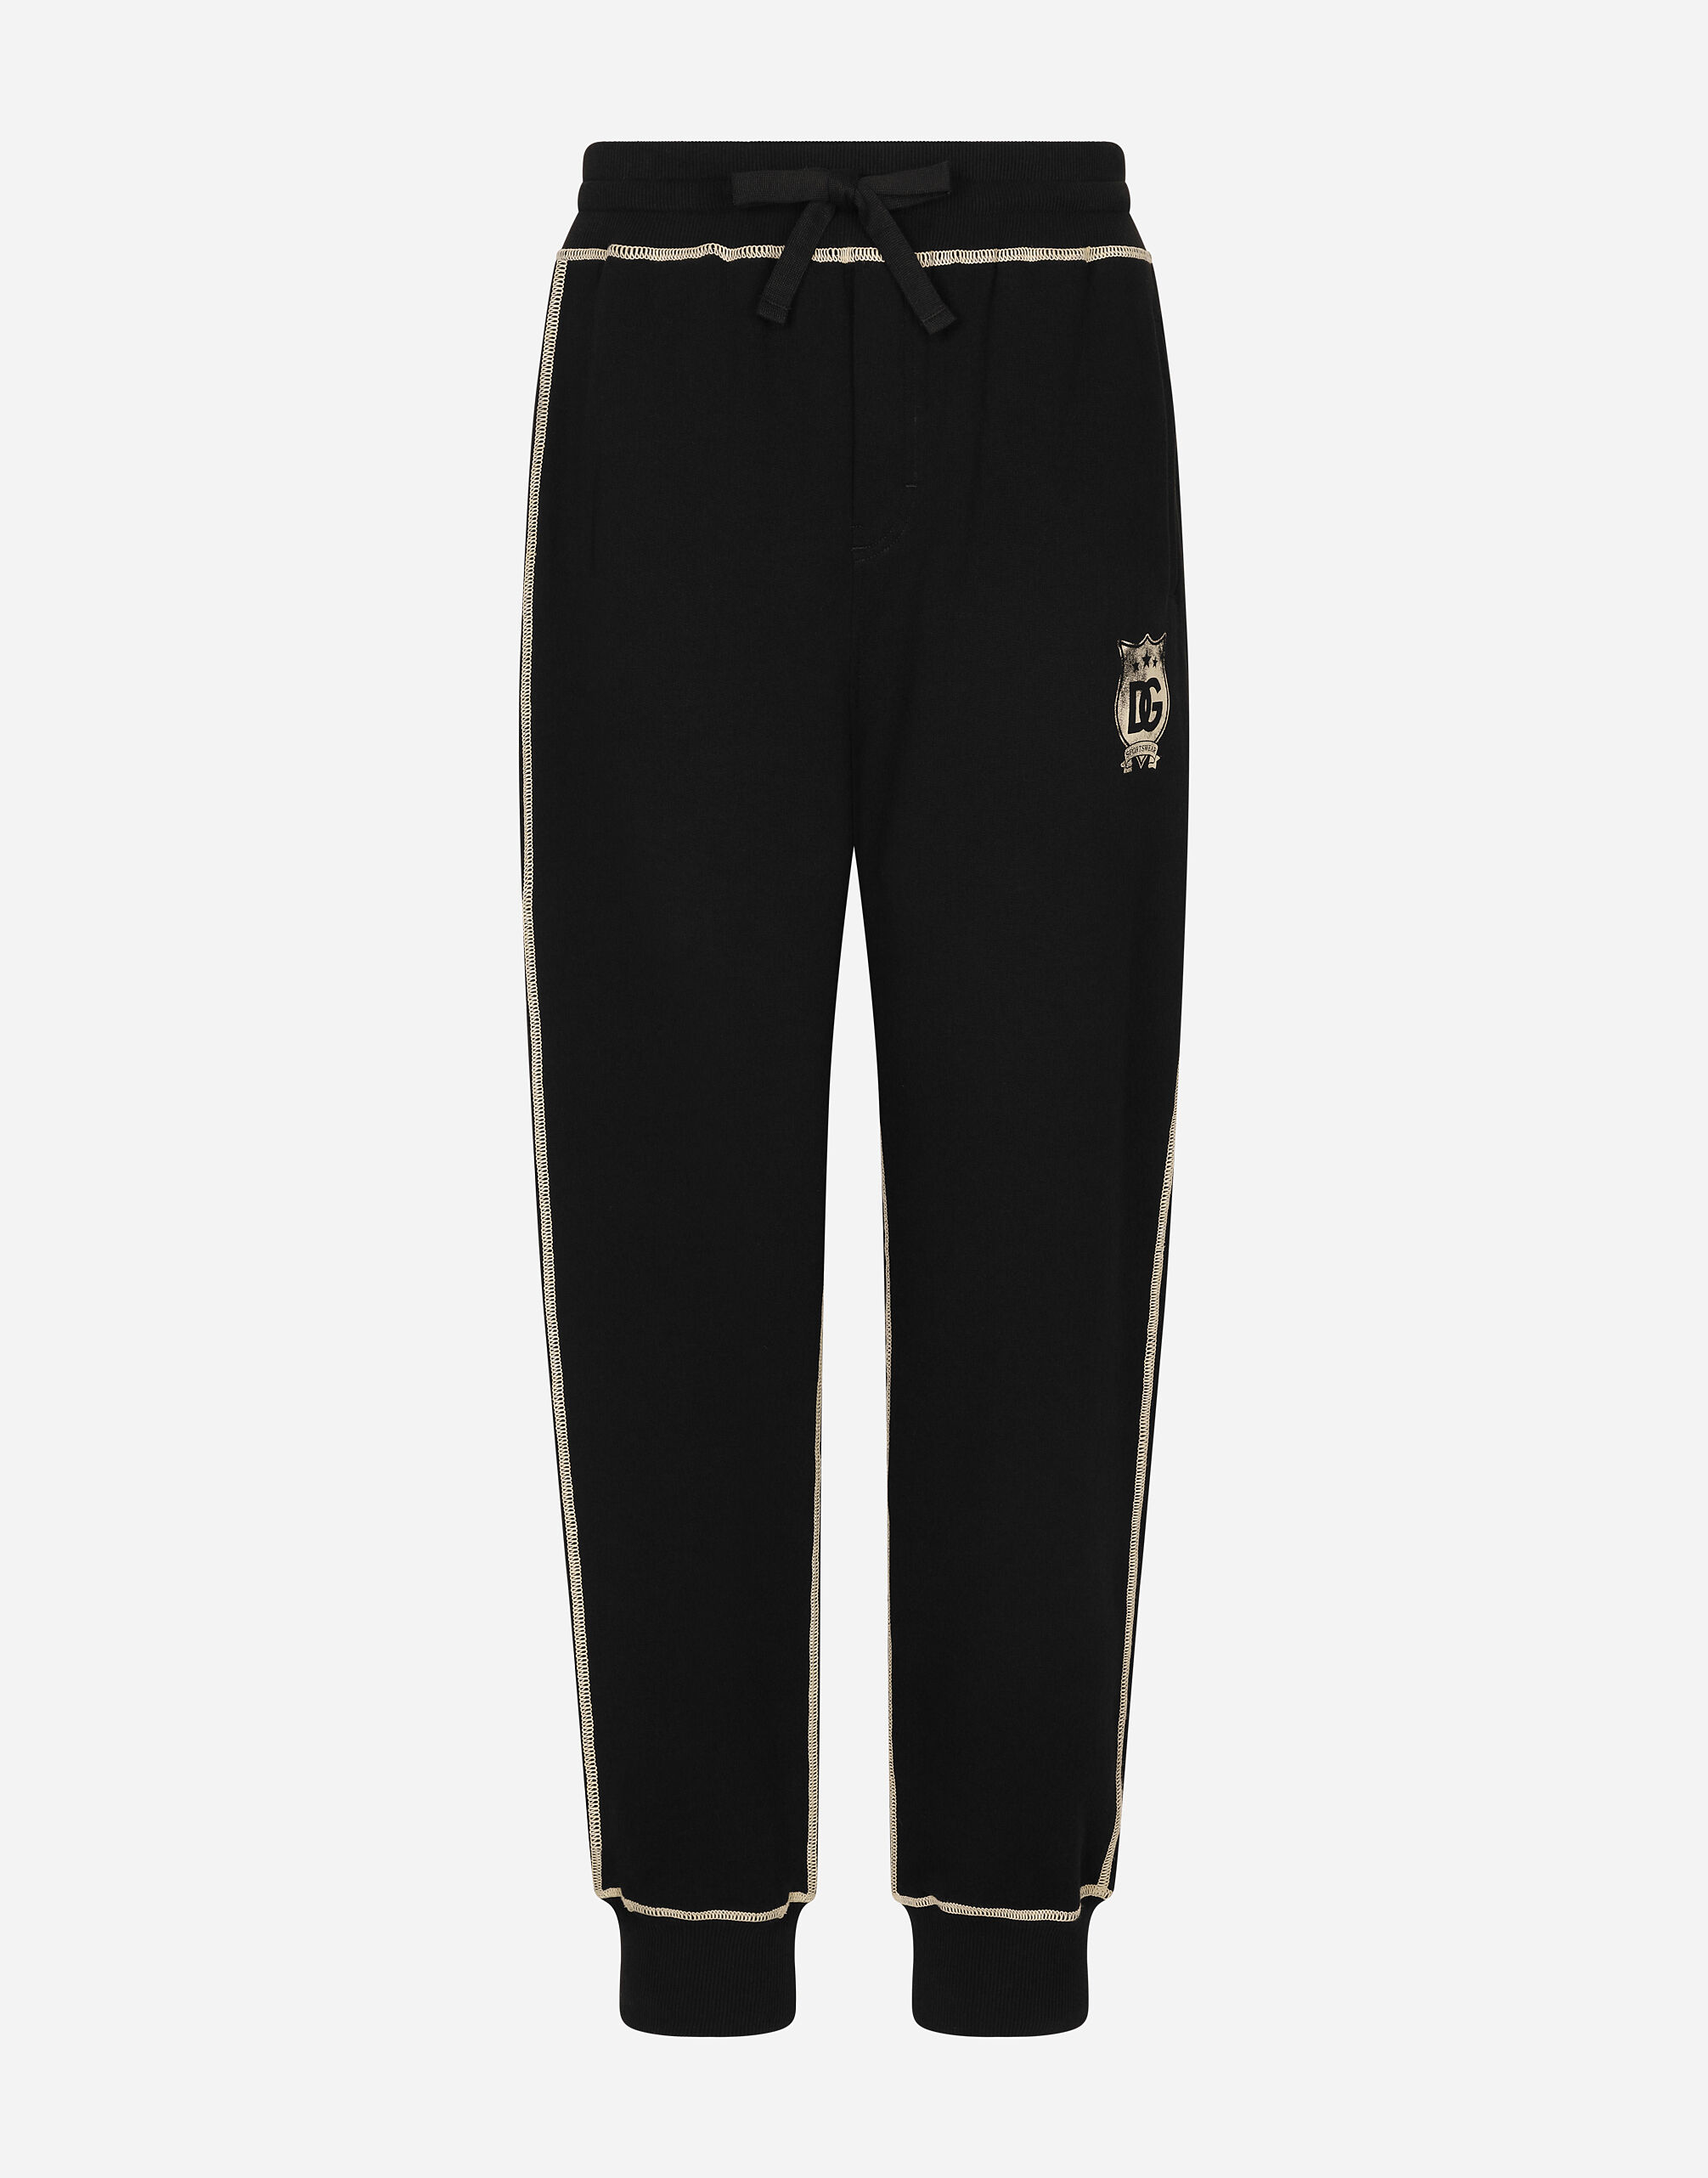 Dolce & Gabbana Jogging pants with heraldic DG logo Multicolor GY6UETFR4BP